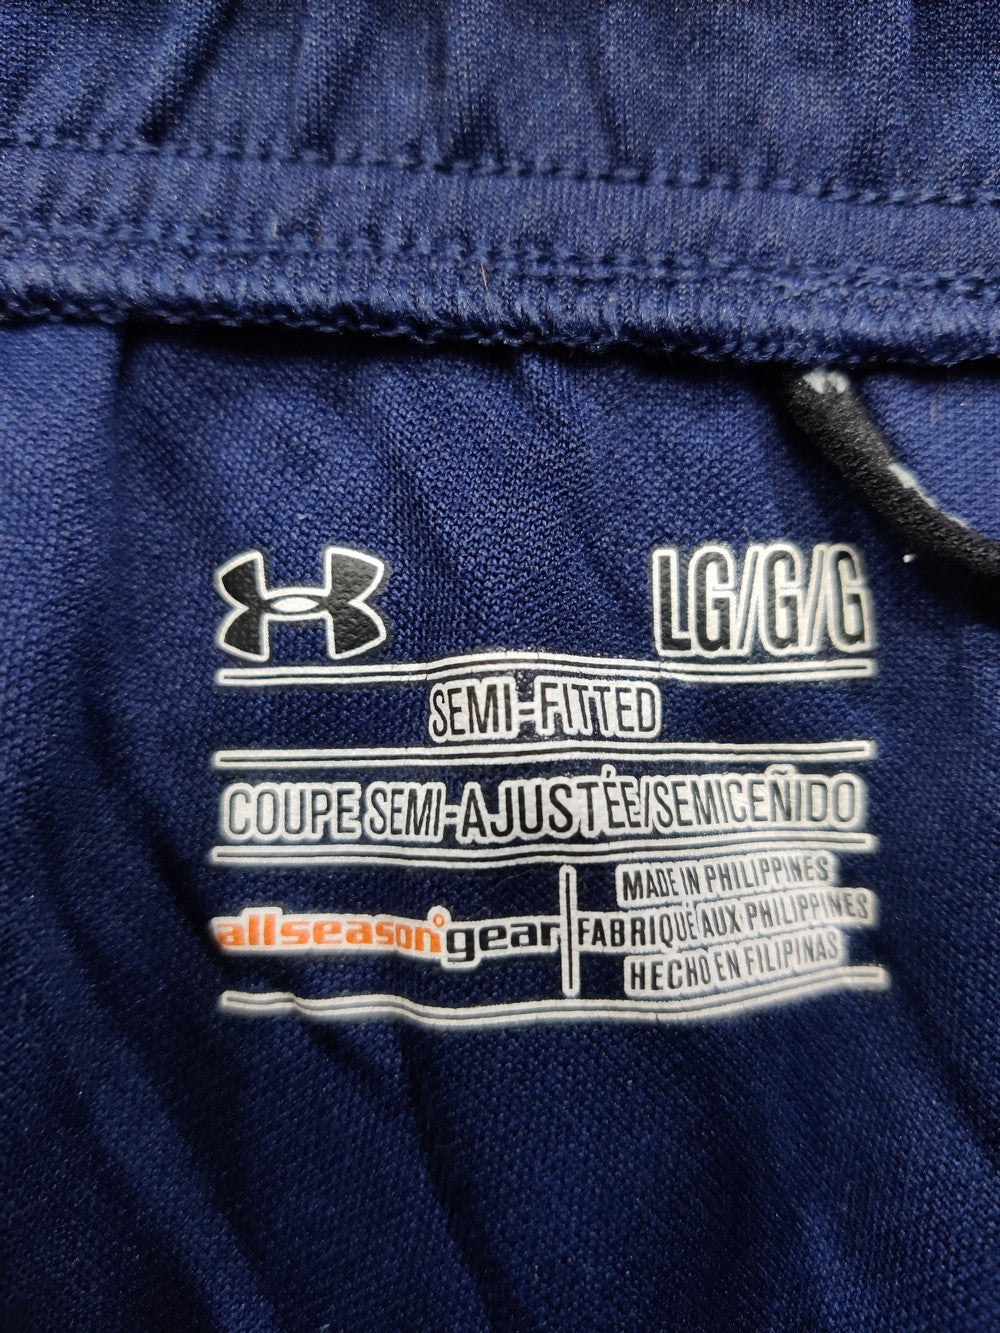 Under Armour Branded Original Sports Winter Trouser For Men